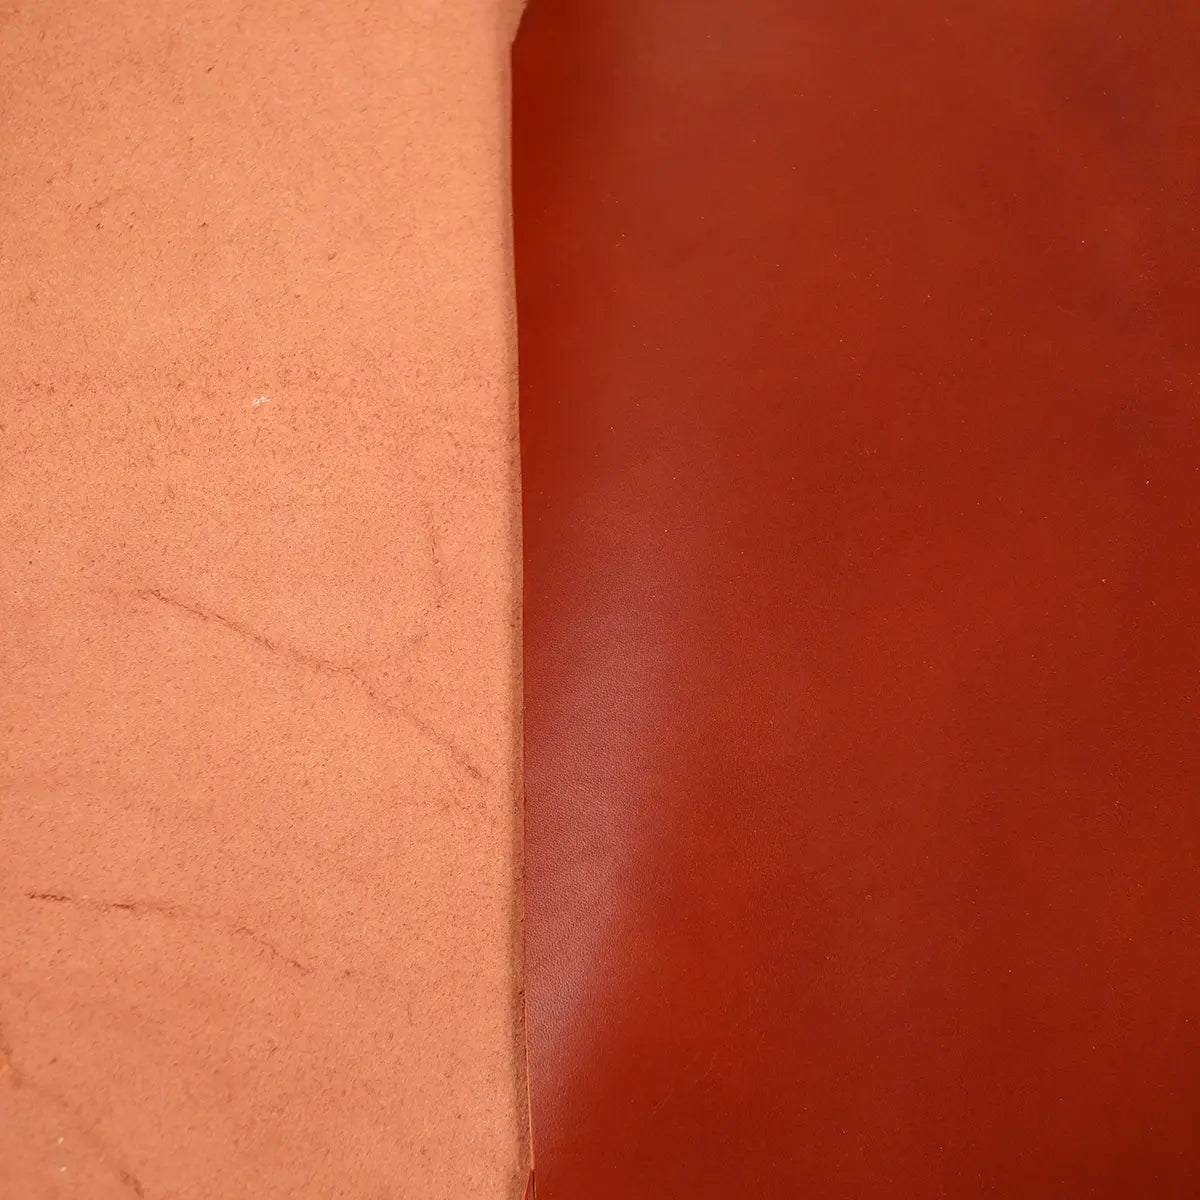 Chestnut Holster Strap 7-8oz Leather